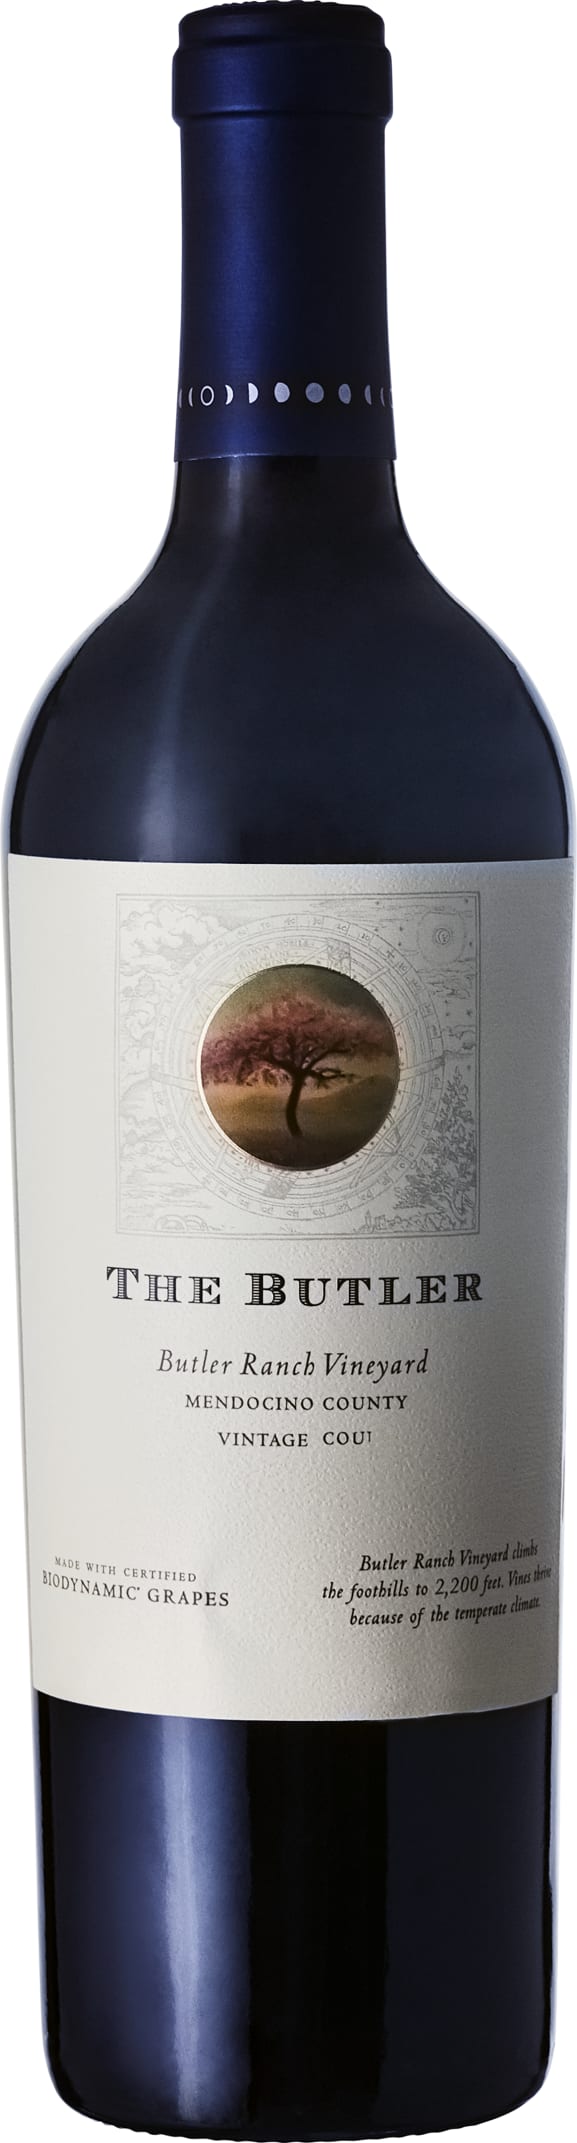 Bonterra The Butler Biodynamic Red 2019 75cl - Buy Bonterra Wines from GREAT WINES DIRECT wine shop